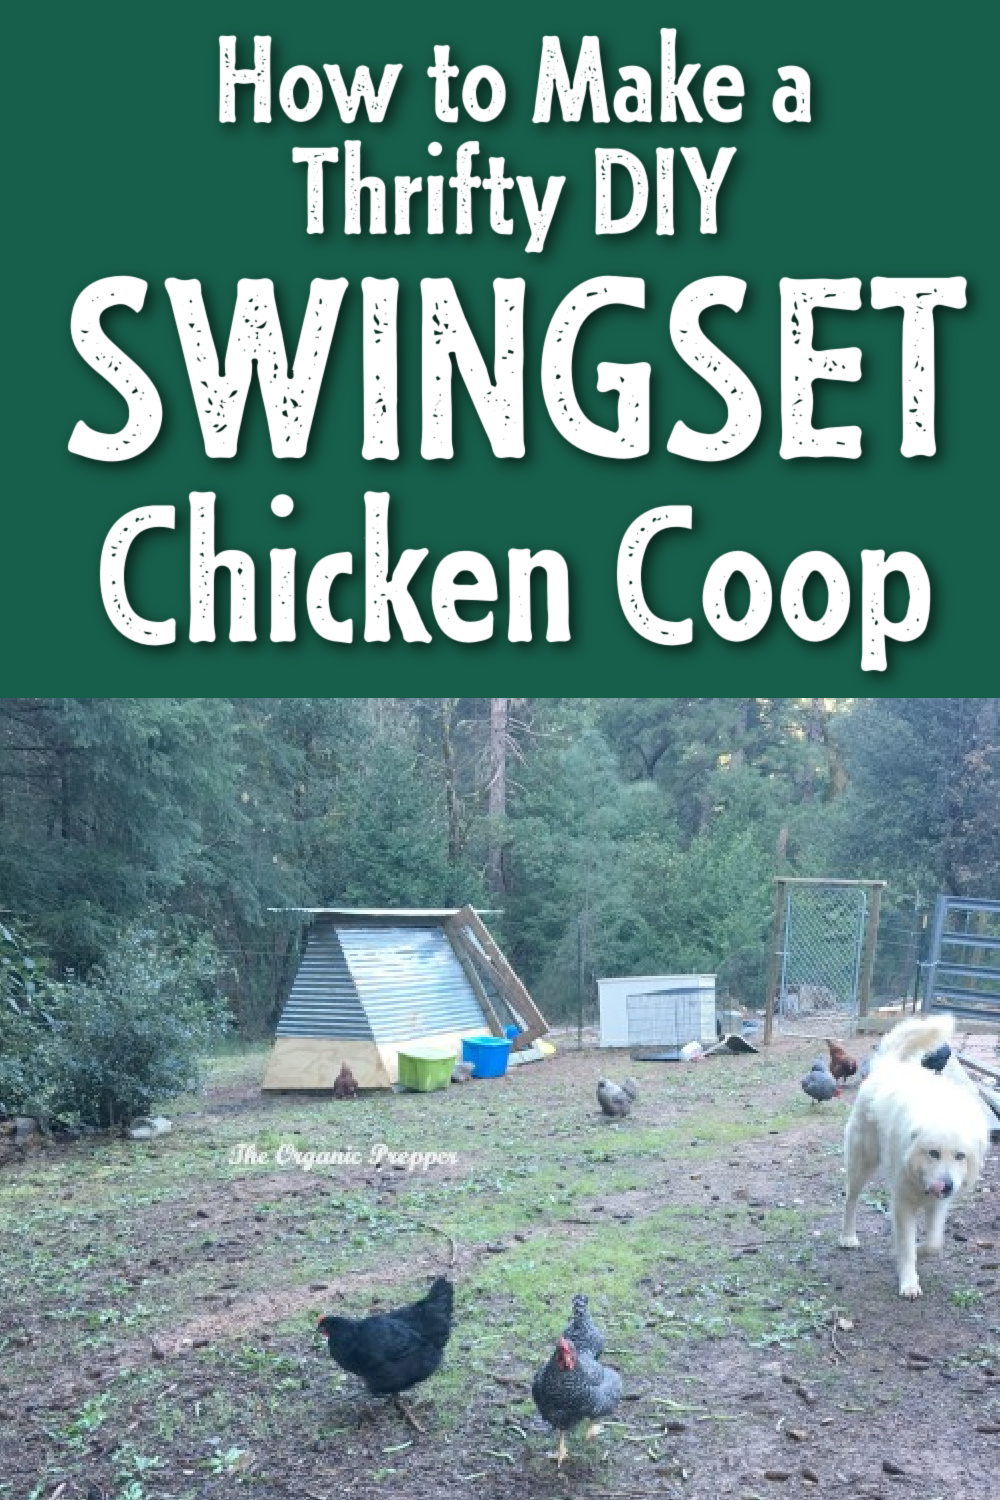 Make a Thrifty DIY Swingset Chicken Coop